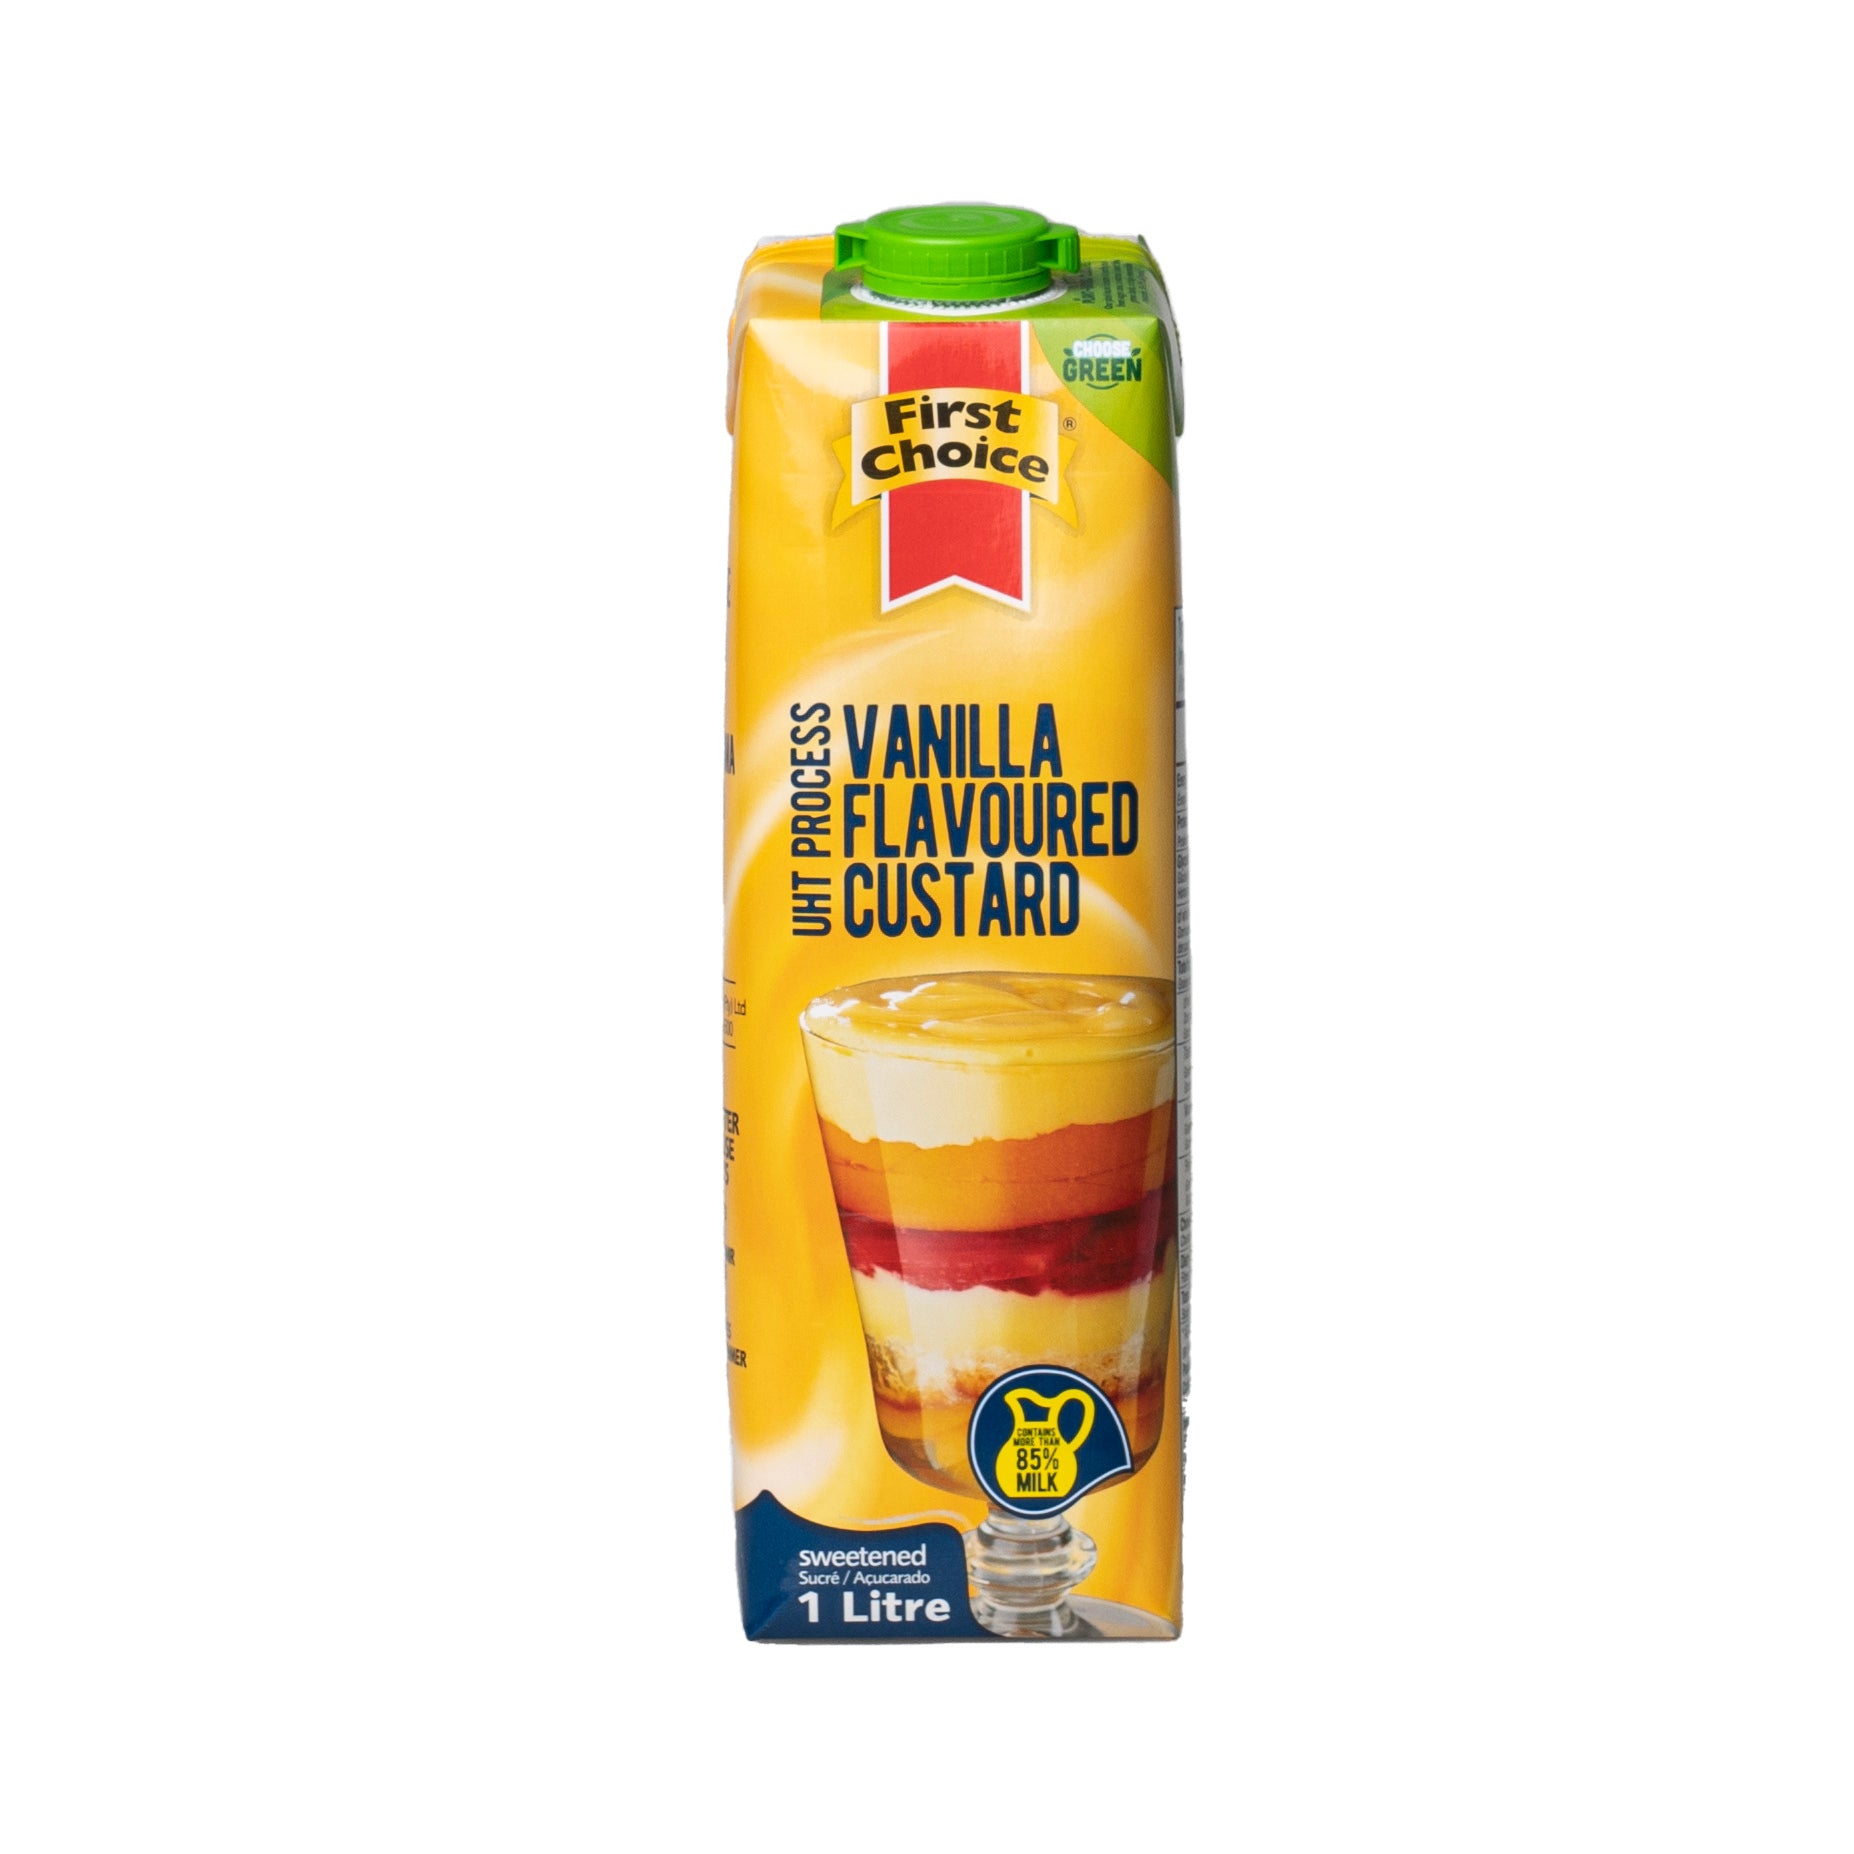 Custard | Vanilla Flavoured - 1L